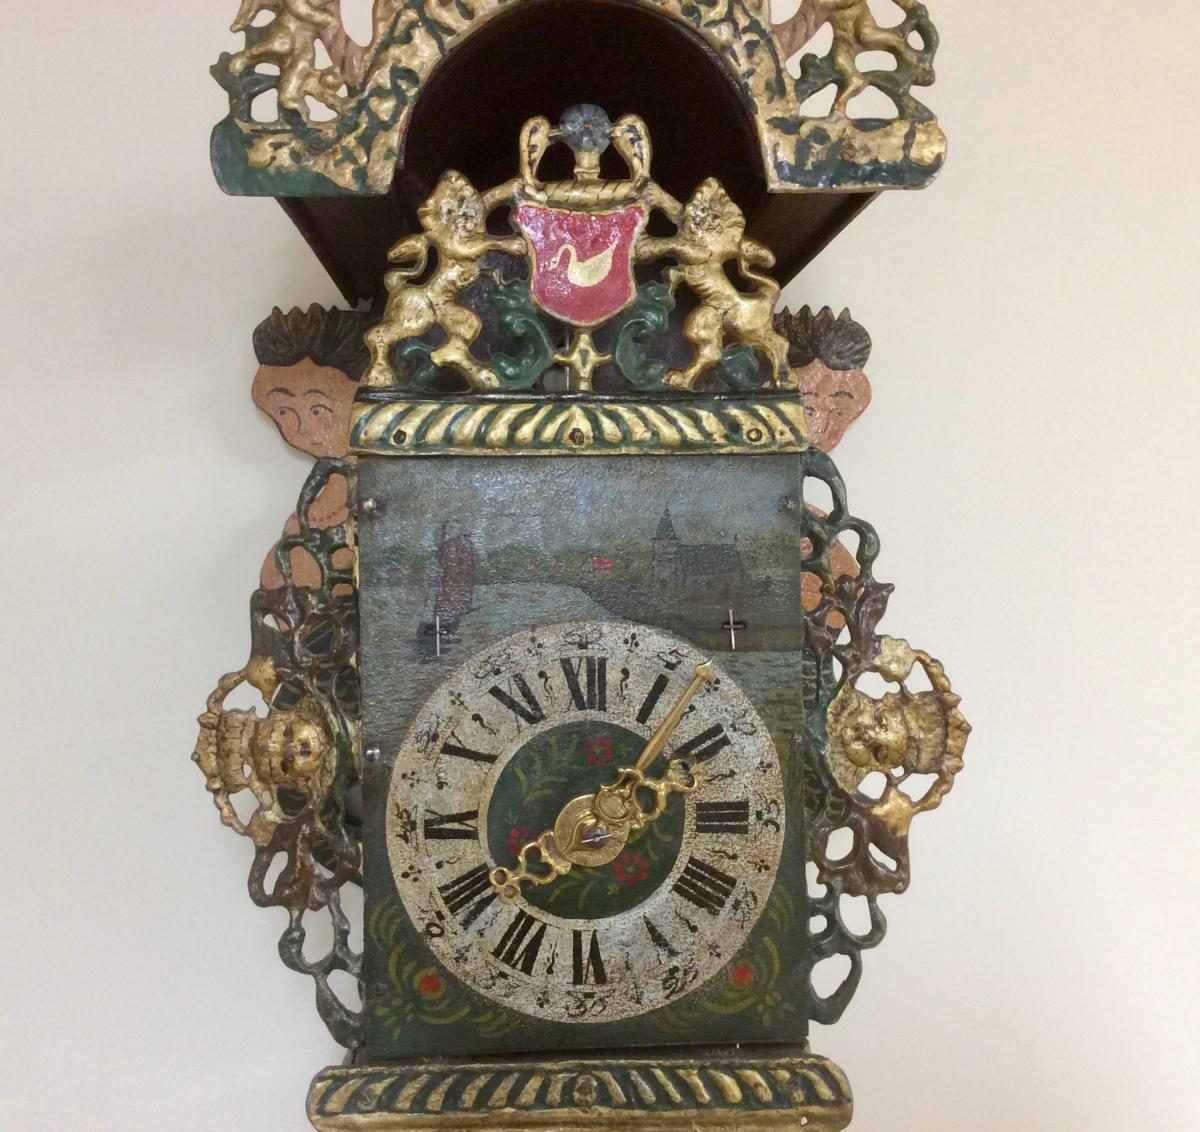 Original Dutch Stoelklok Wall Clock